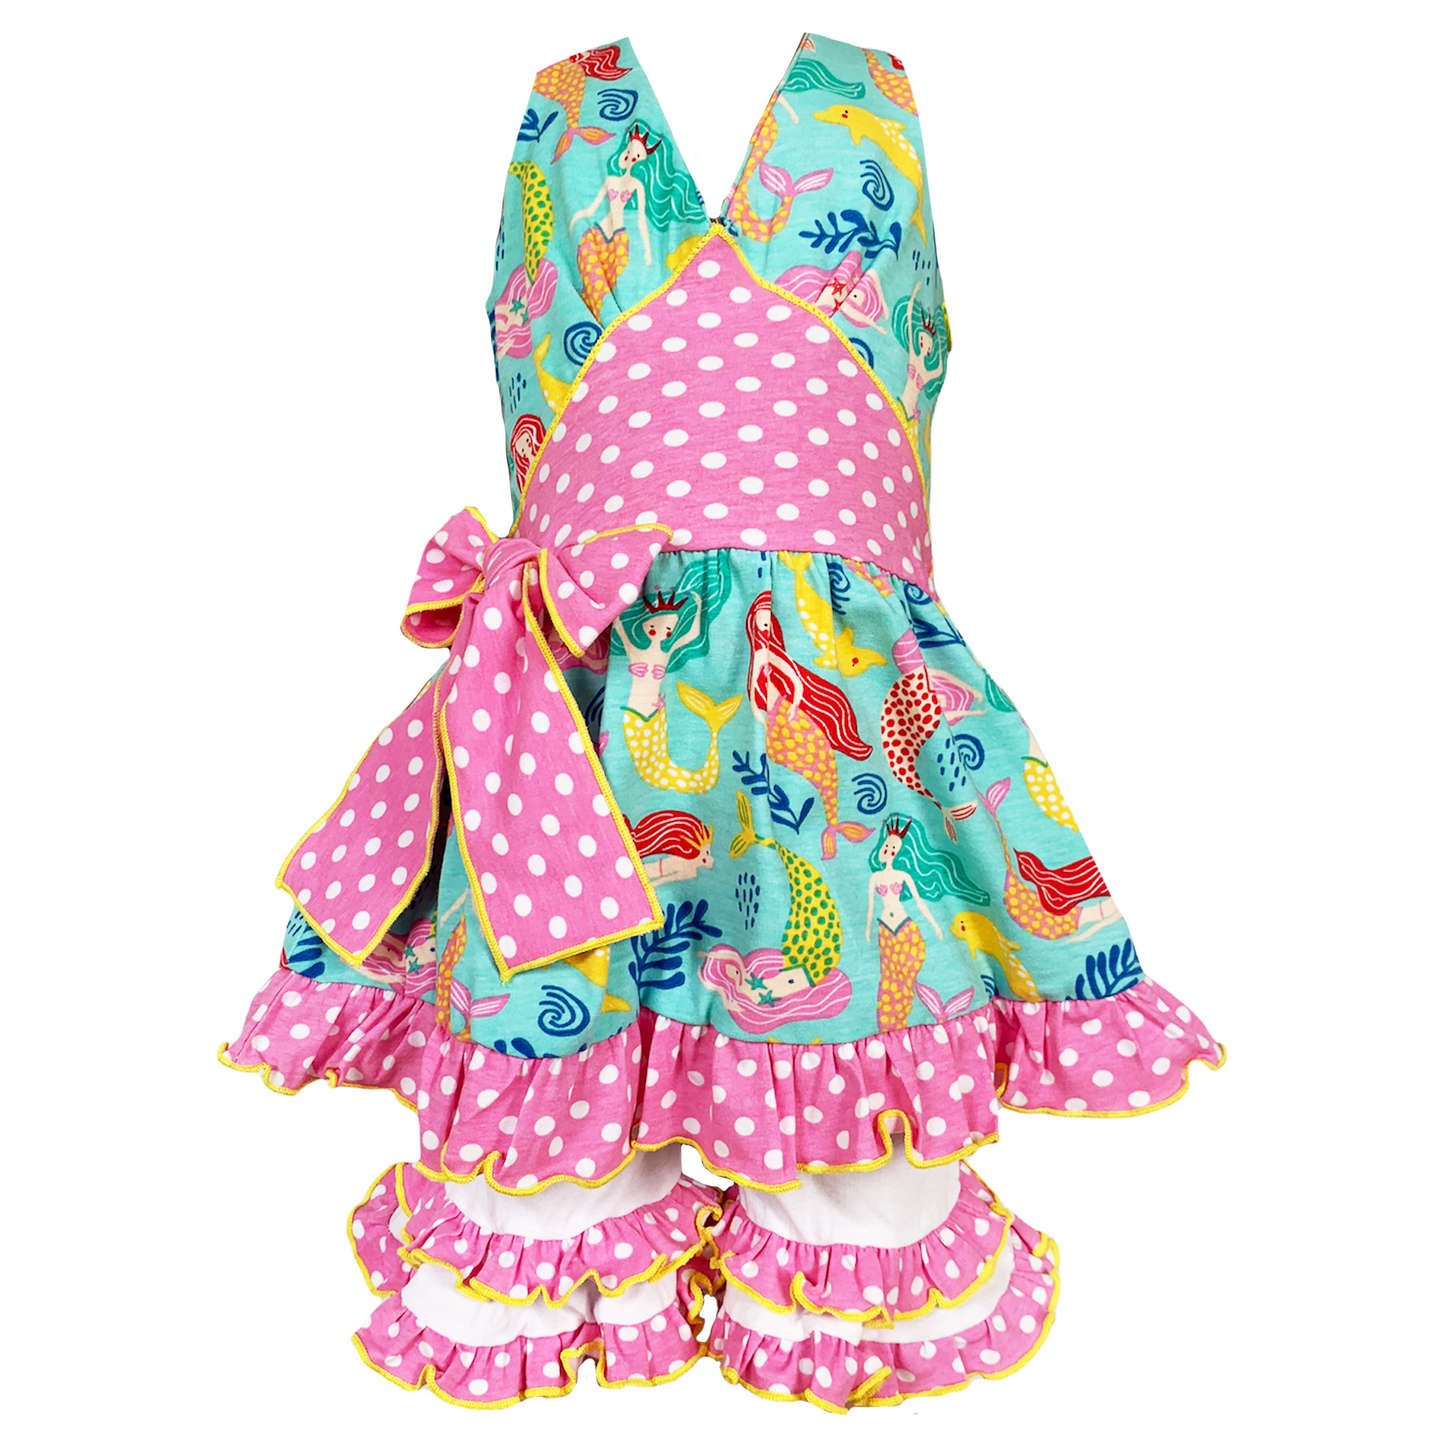 AnnLoren Girls Mermaid Halter Dress & White Ruffle Shorts Boutique Set